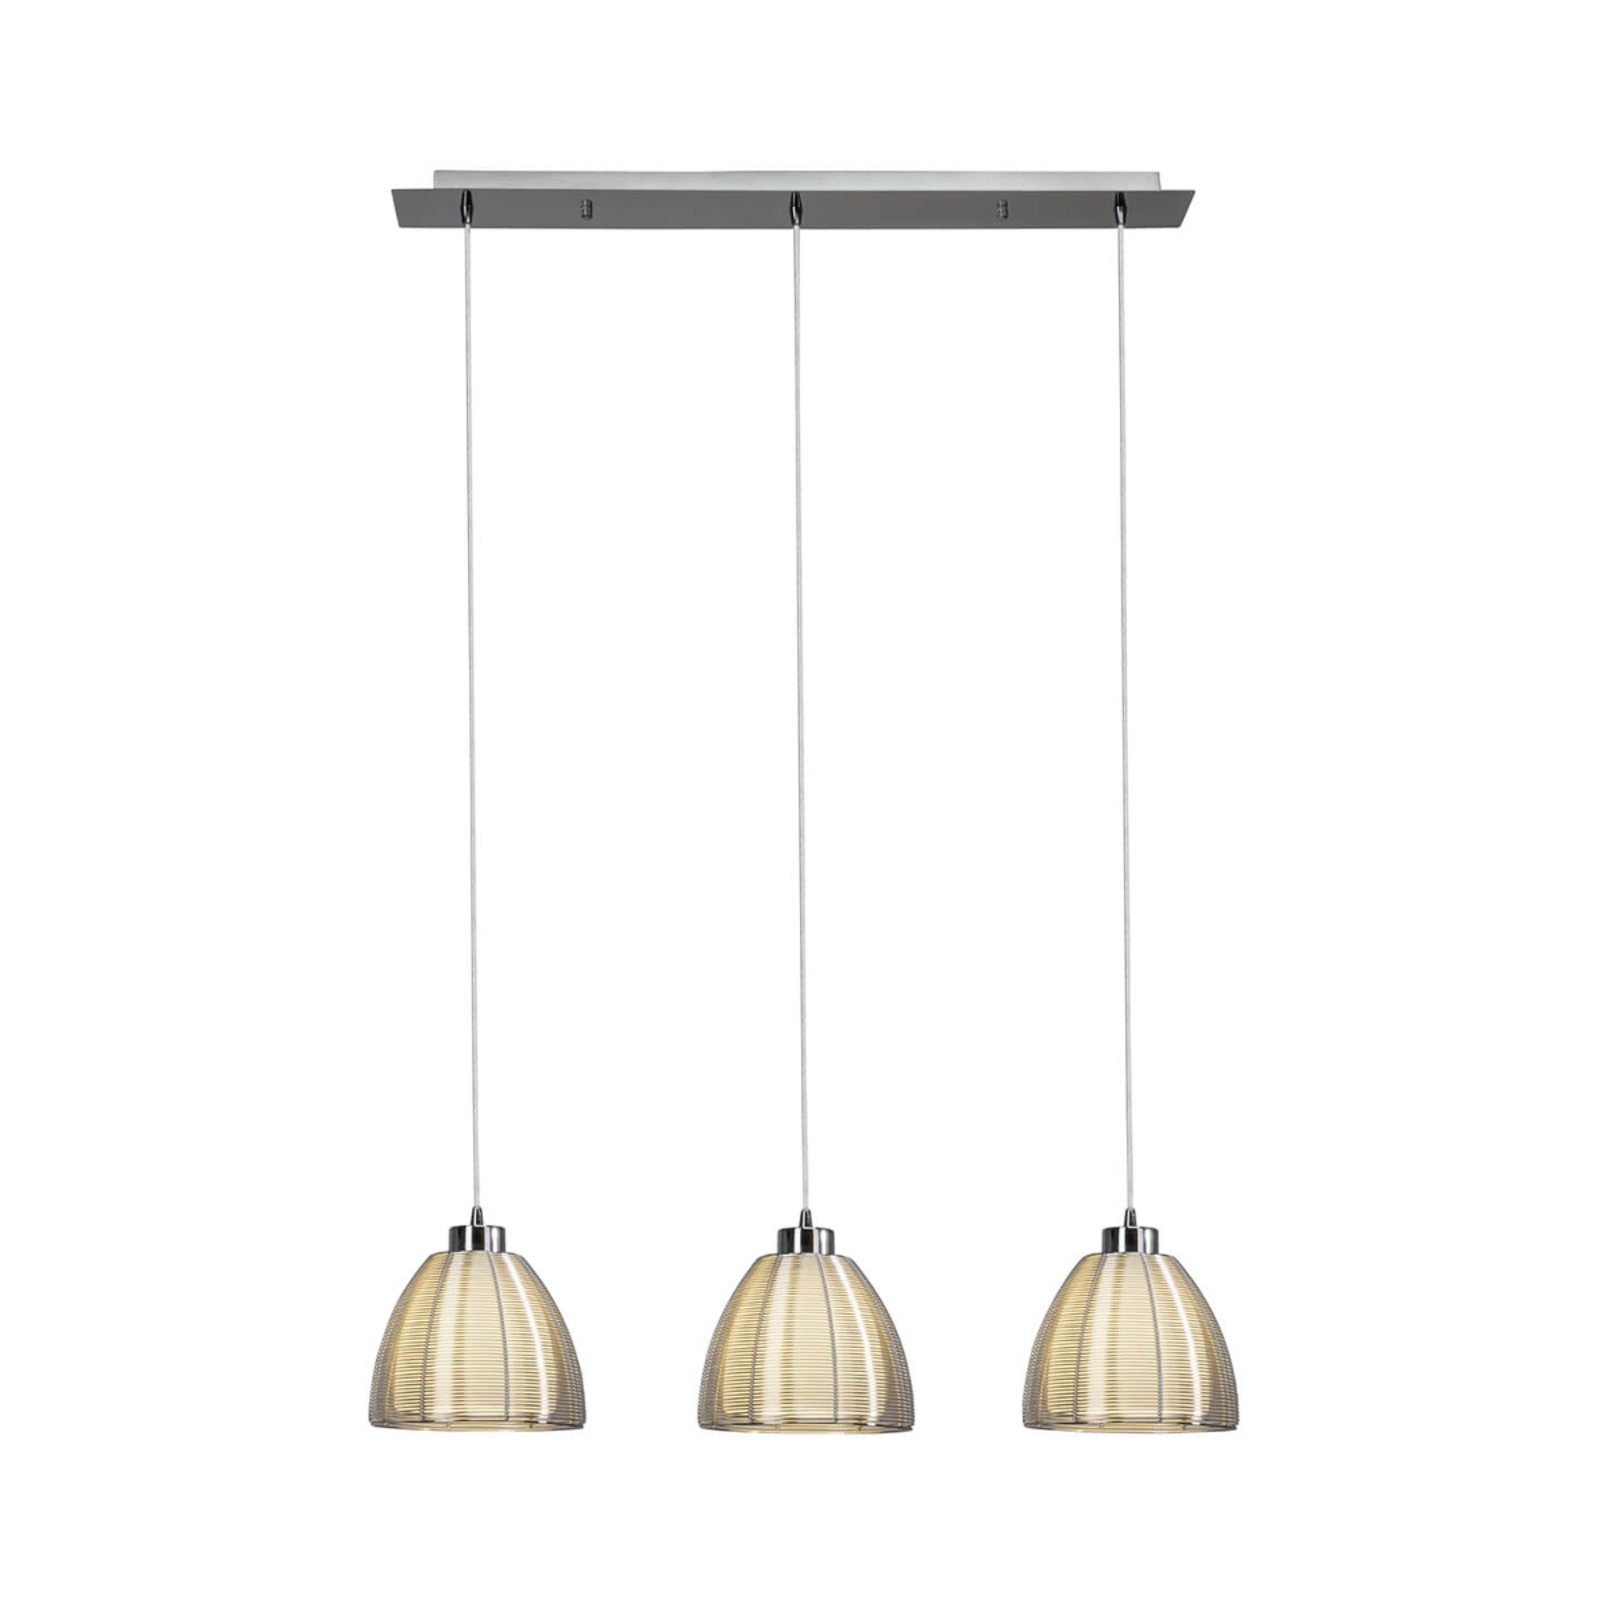 Hanglamp Relax, chroom met drie lampjes